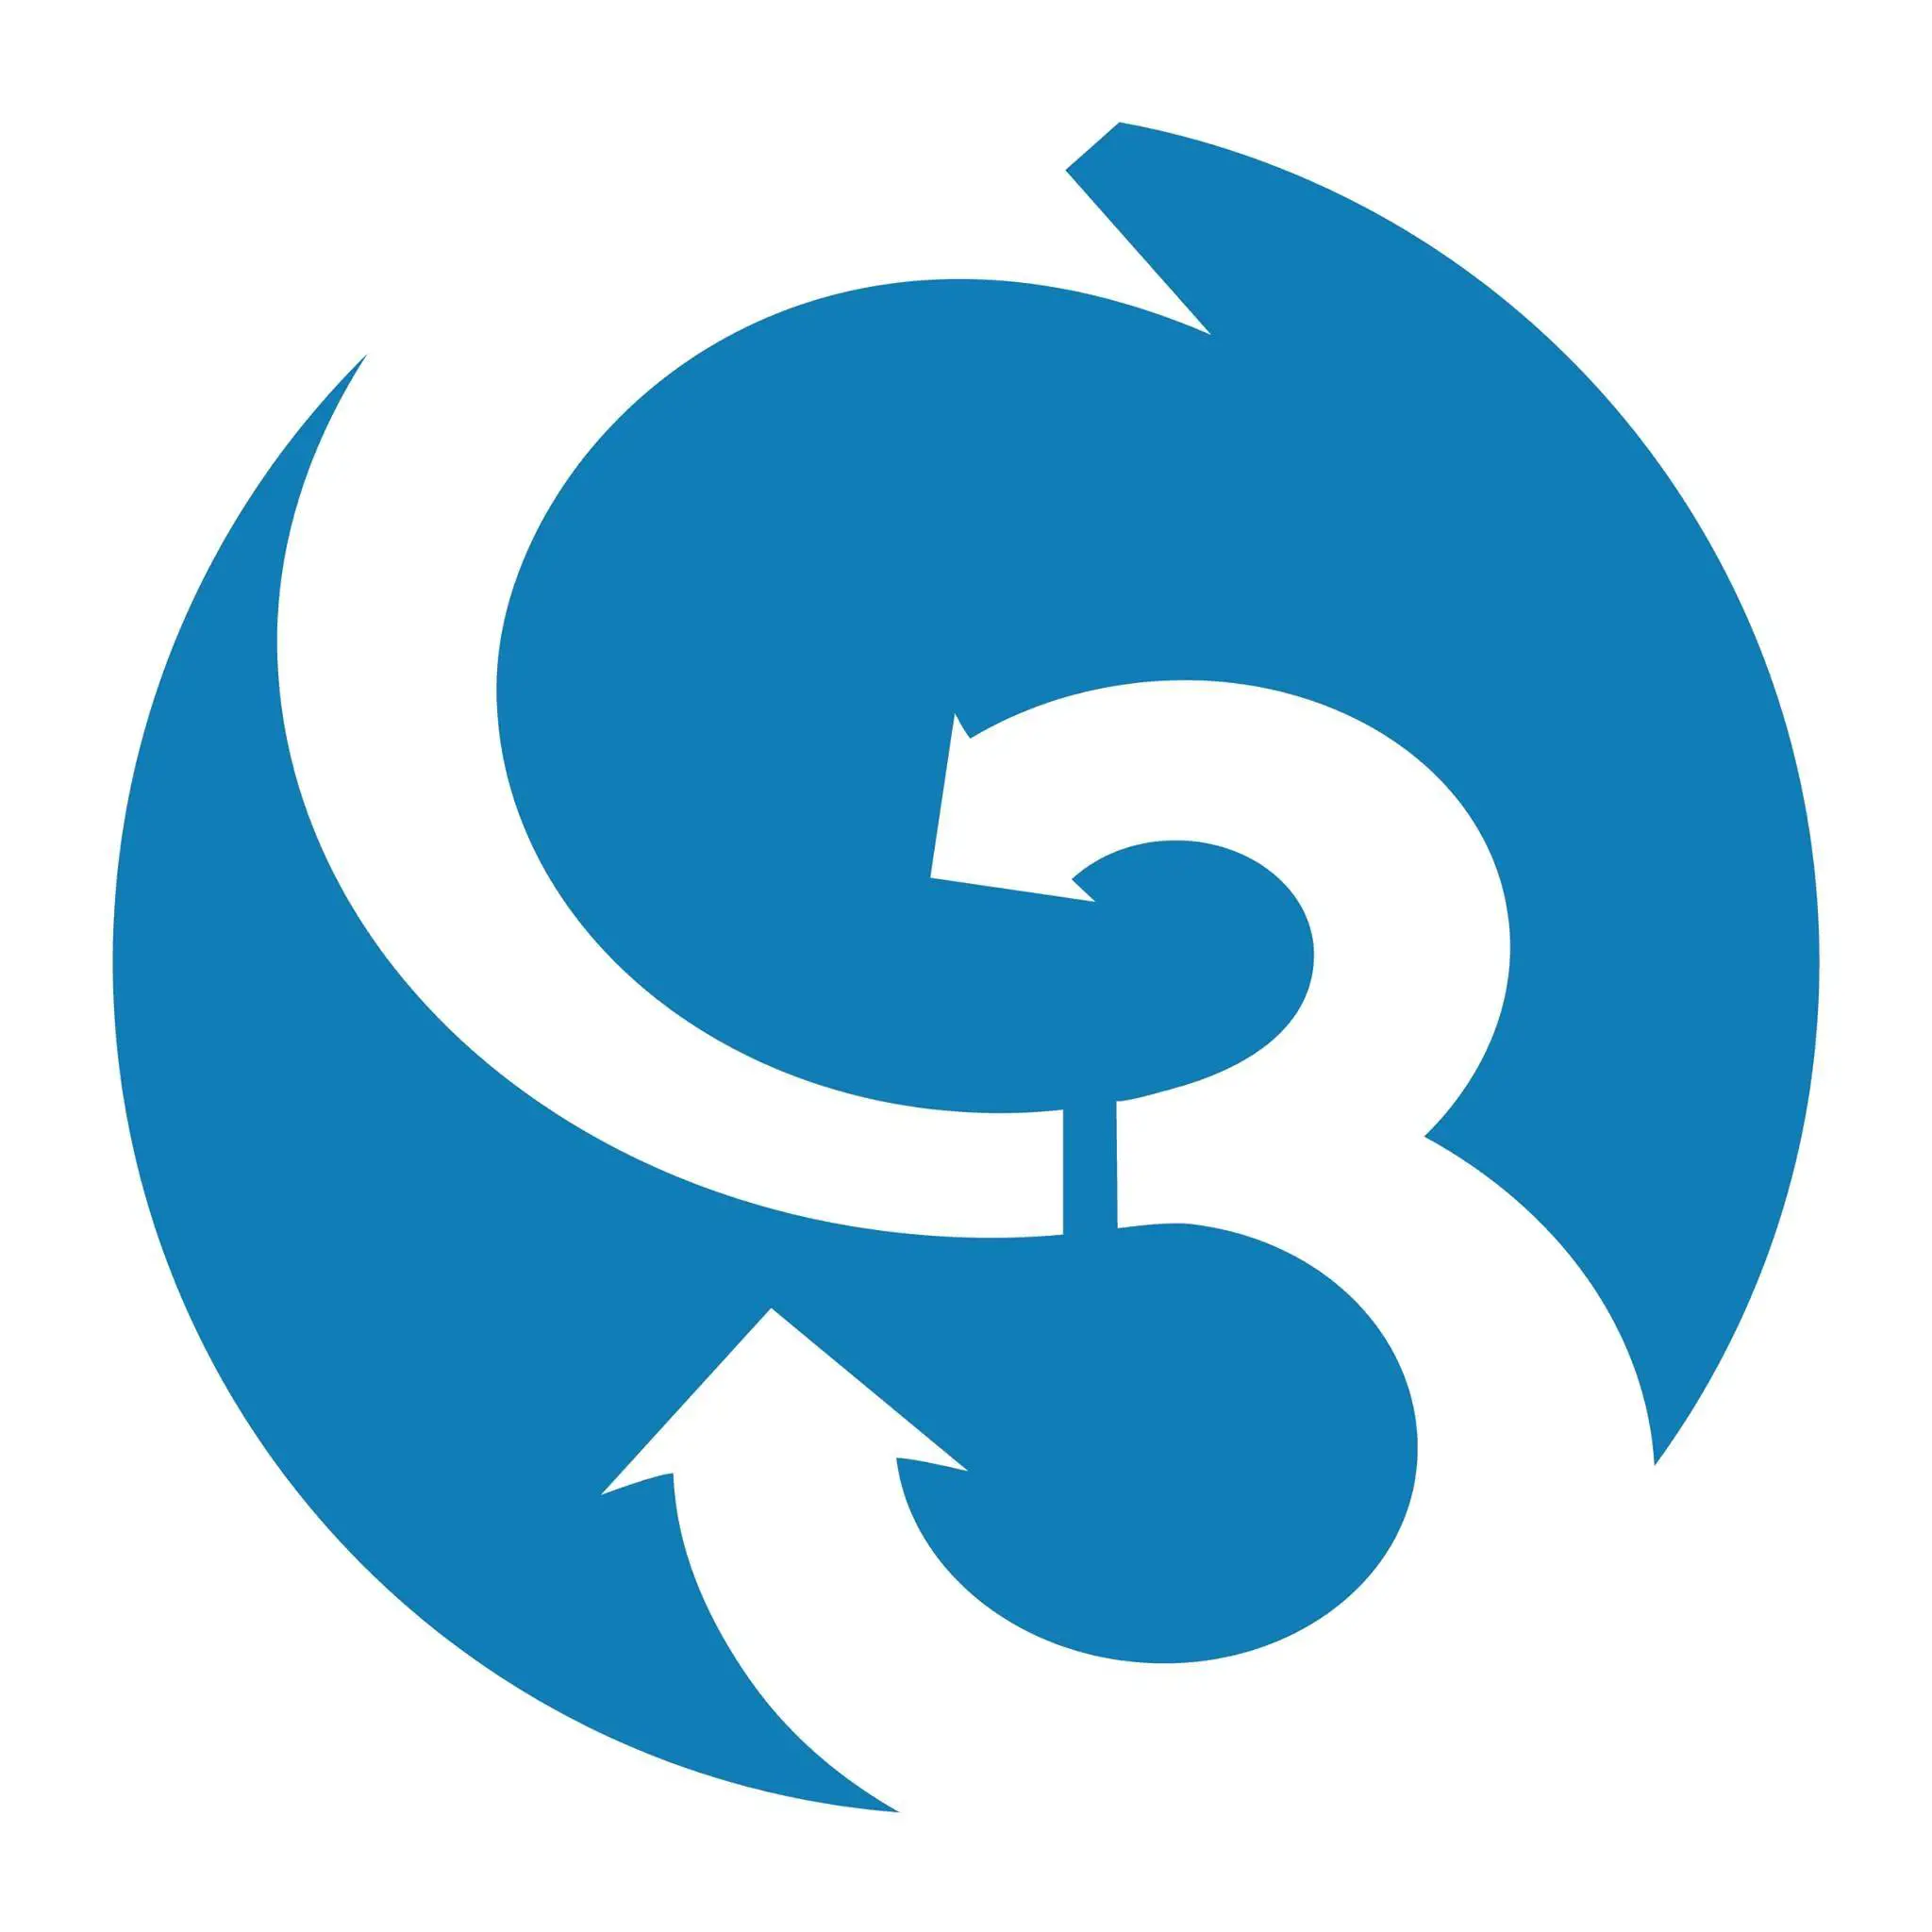 Business logo of C3 - Crystal Clear Creative, Inc.